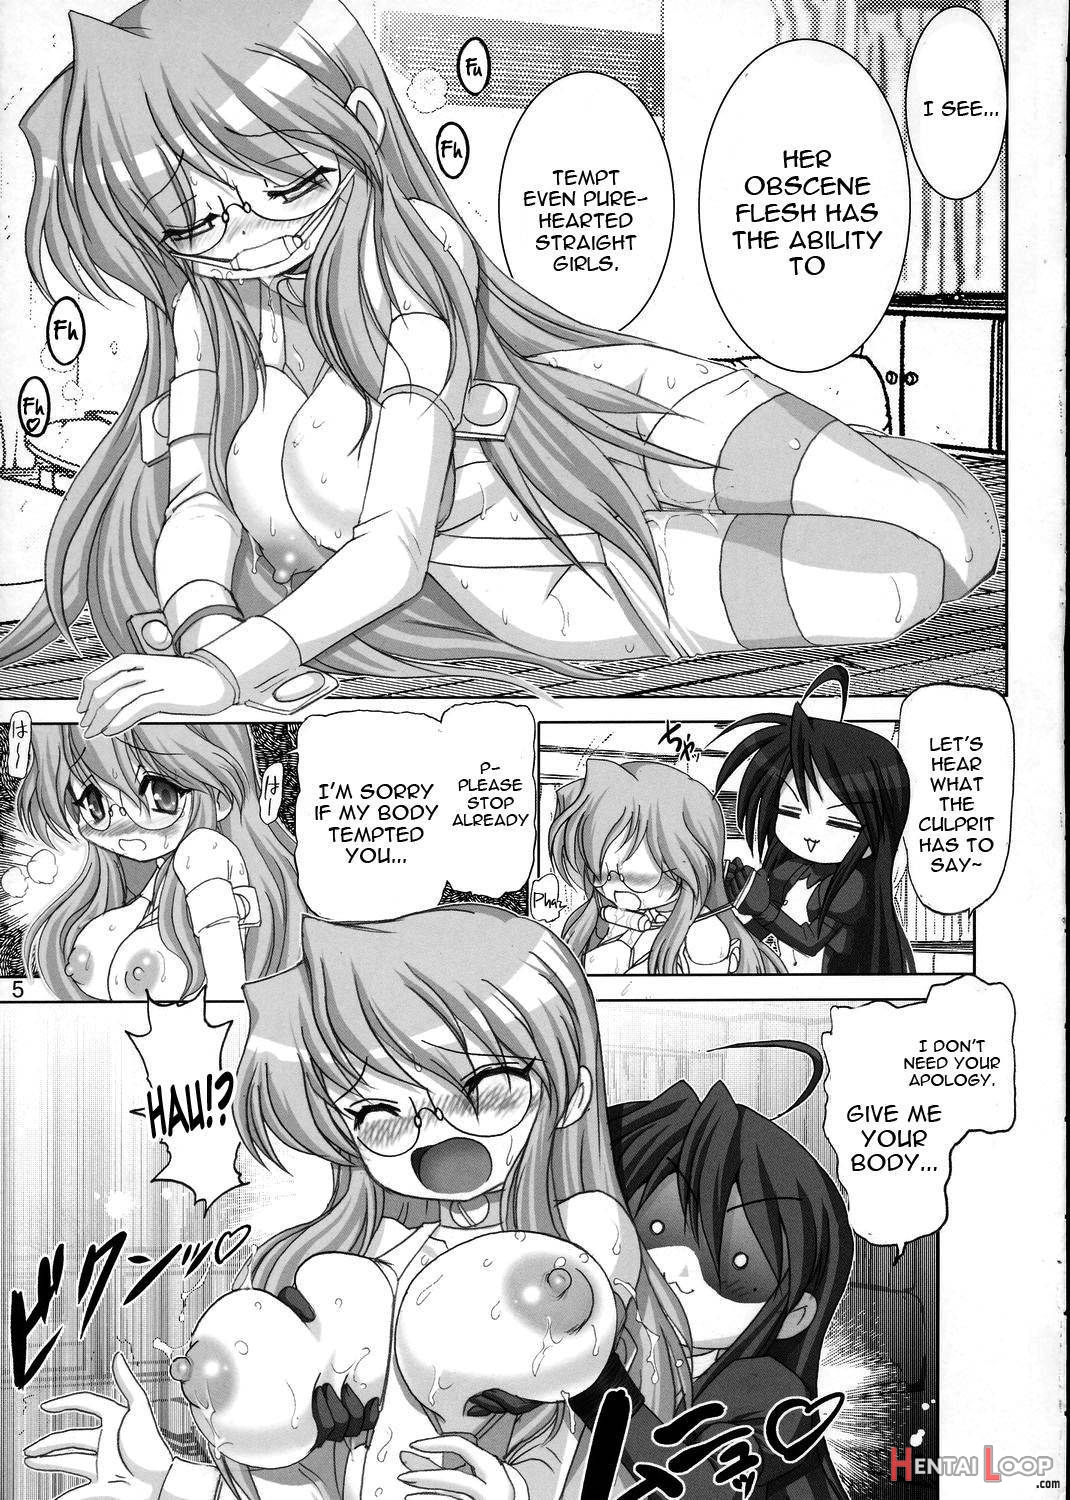 Goku☆laki 2 page 4